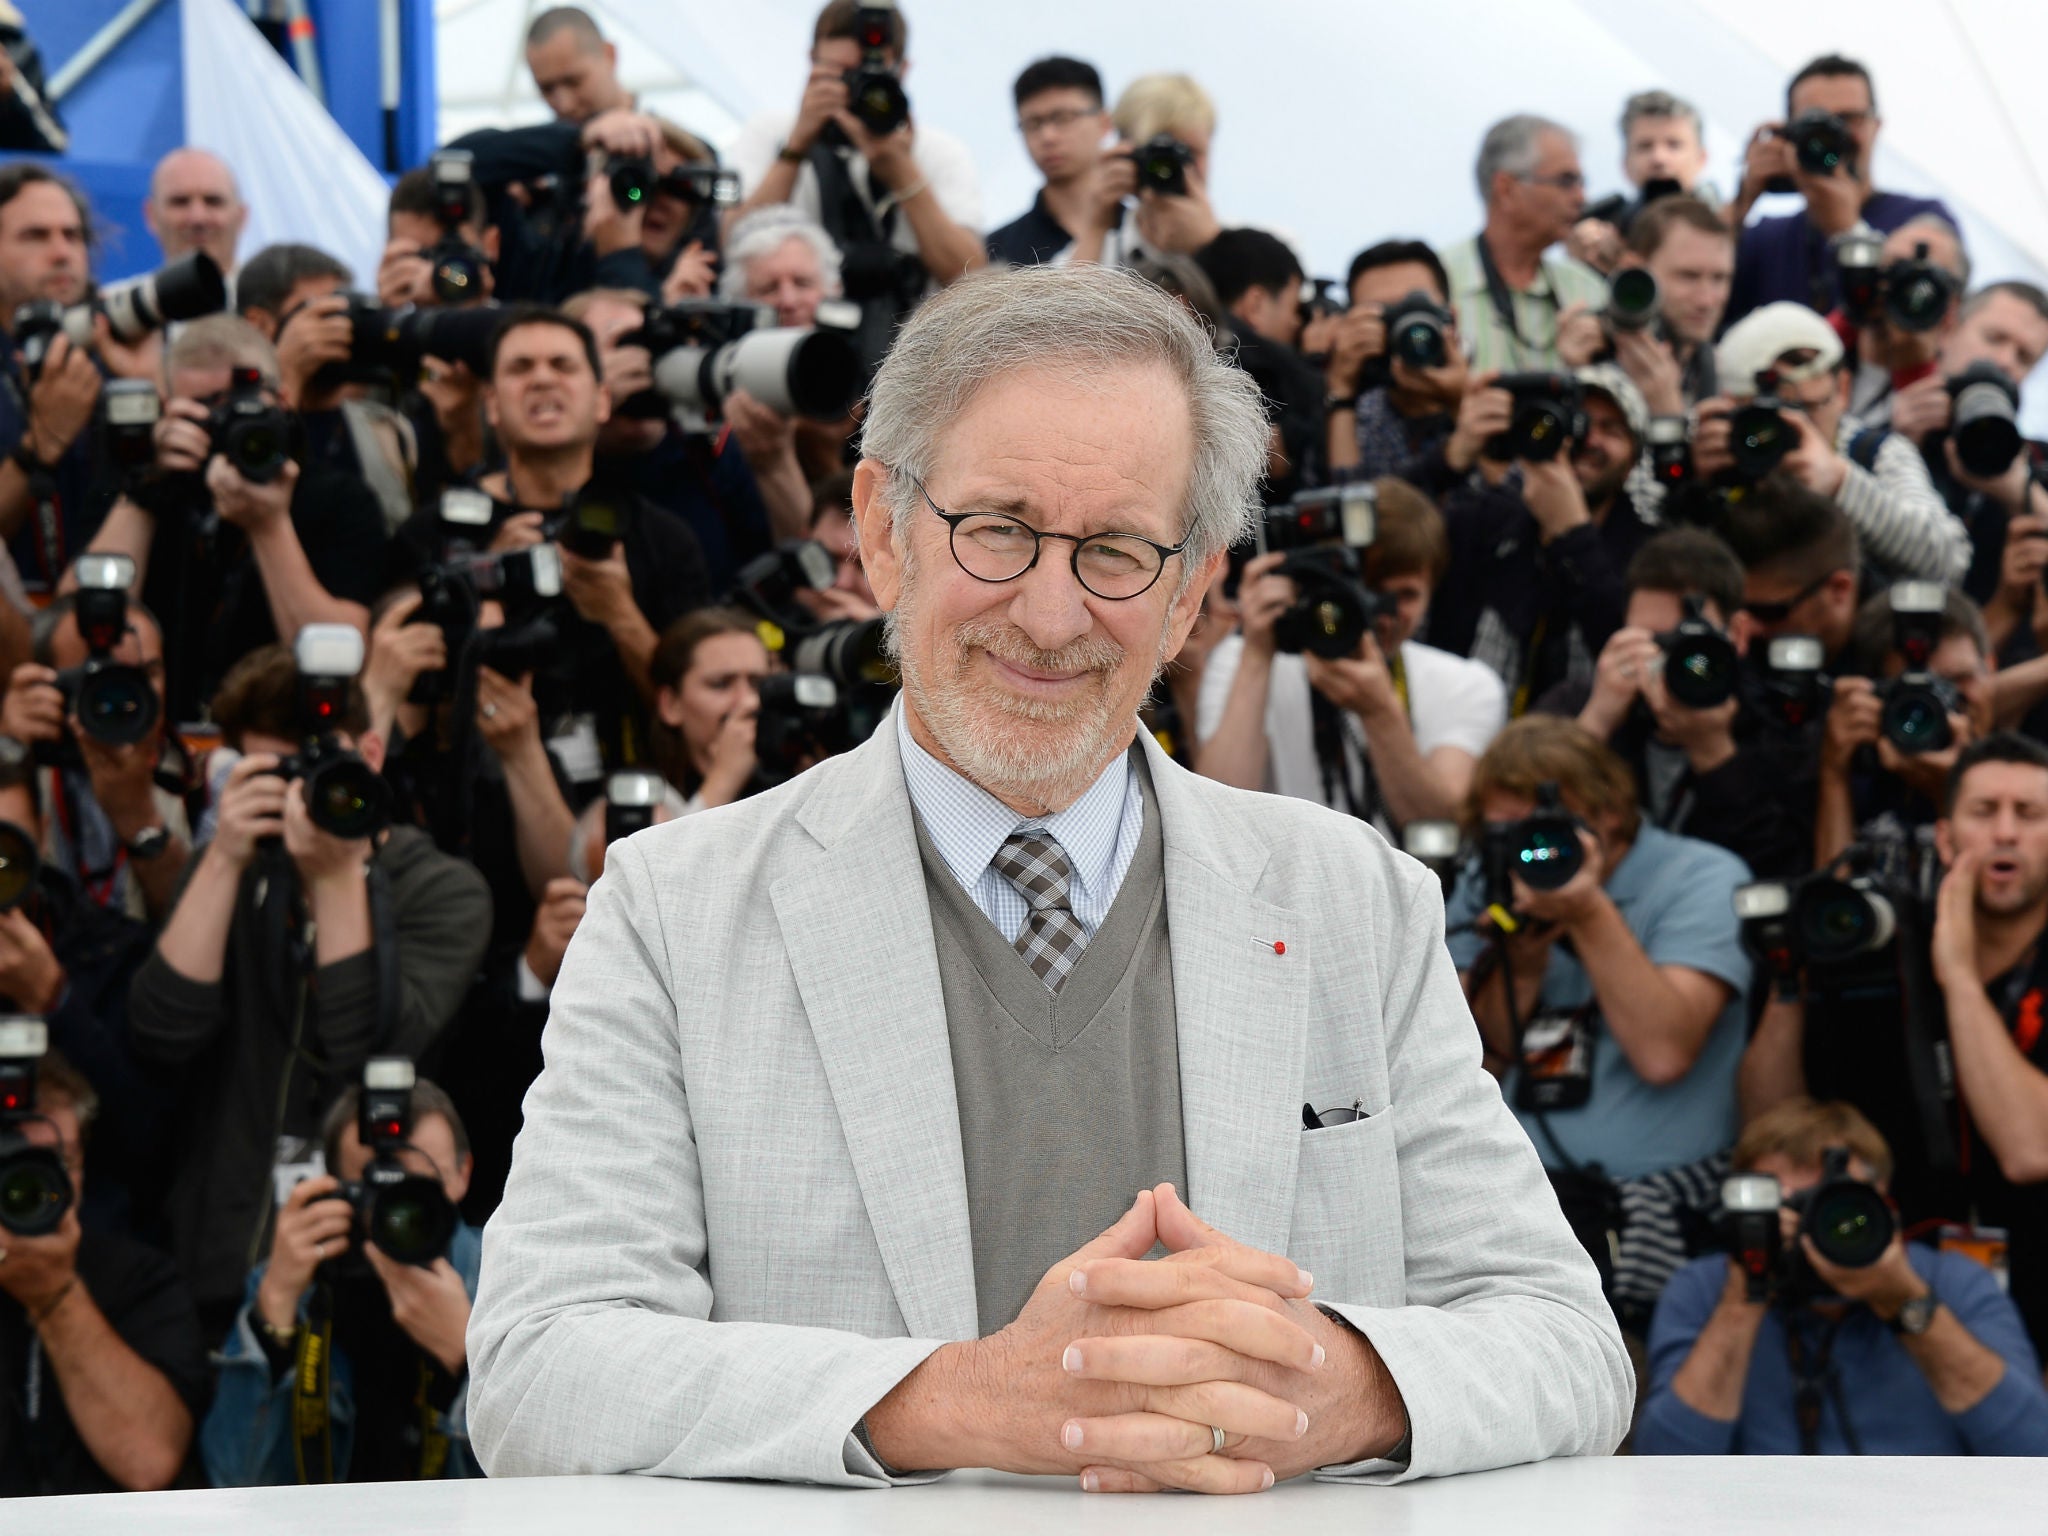 Legendary Hollywood director Steven Spielberg